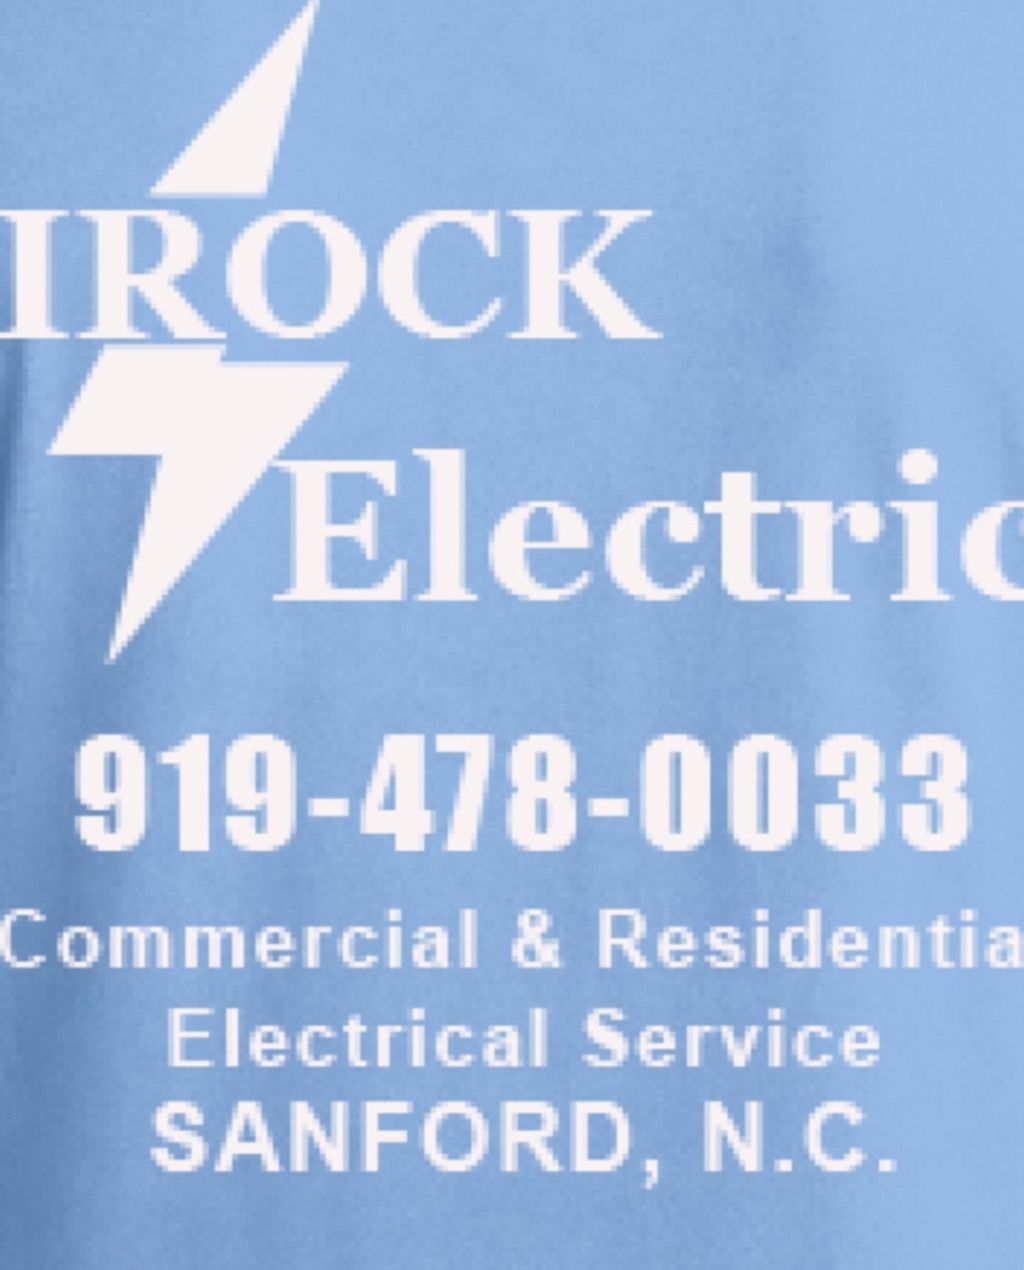 IRock electric